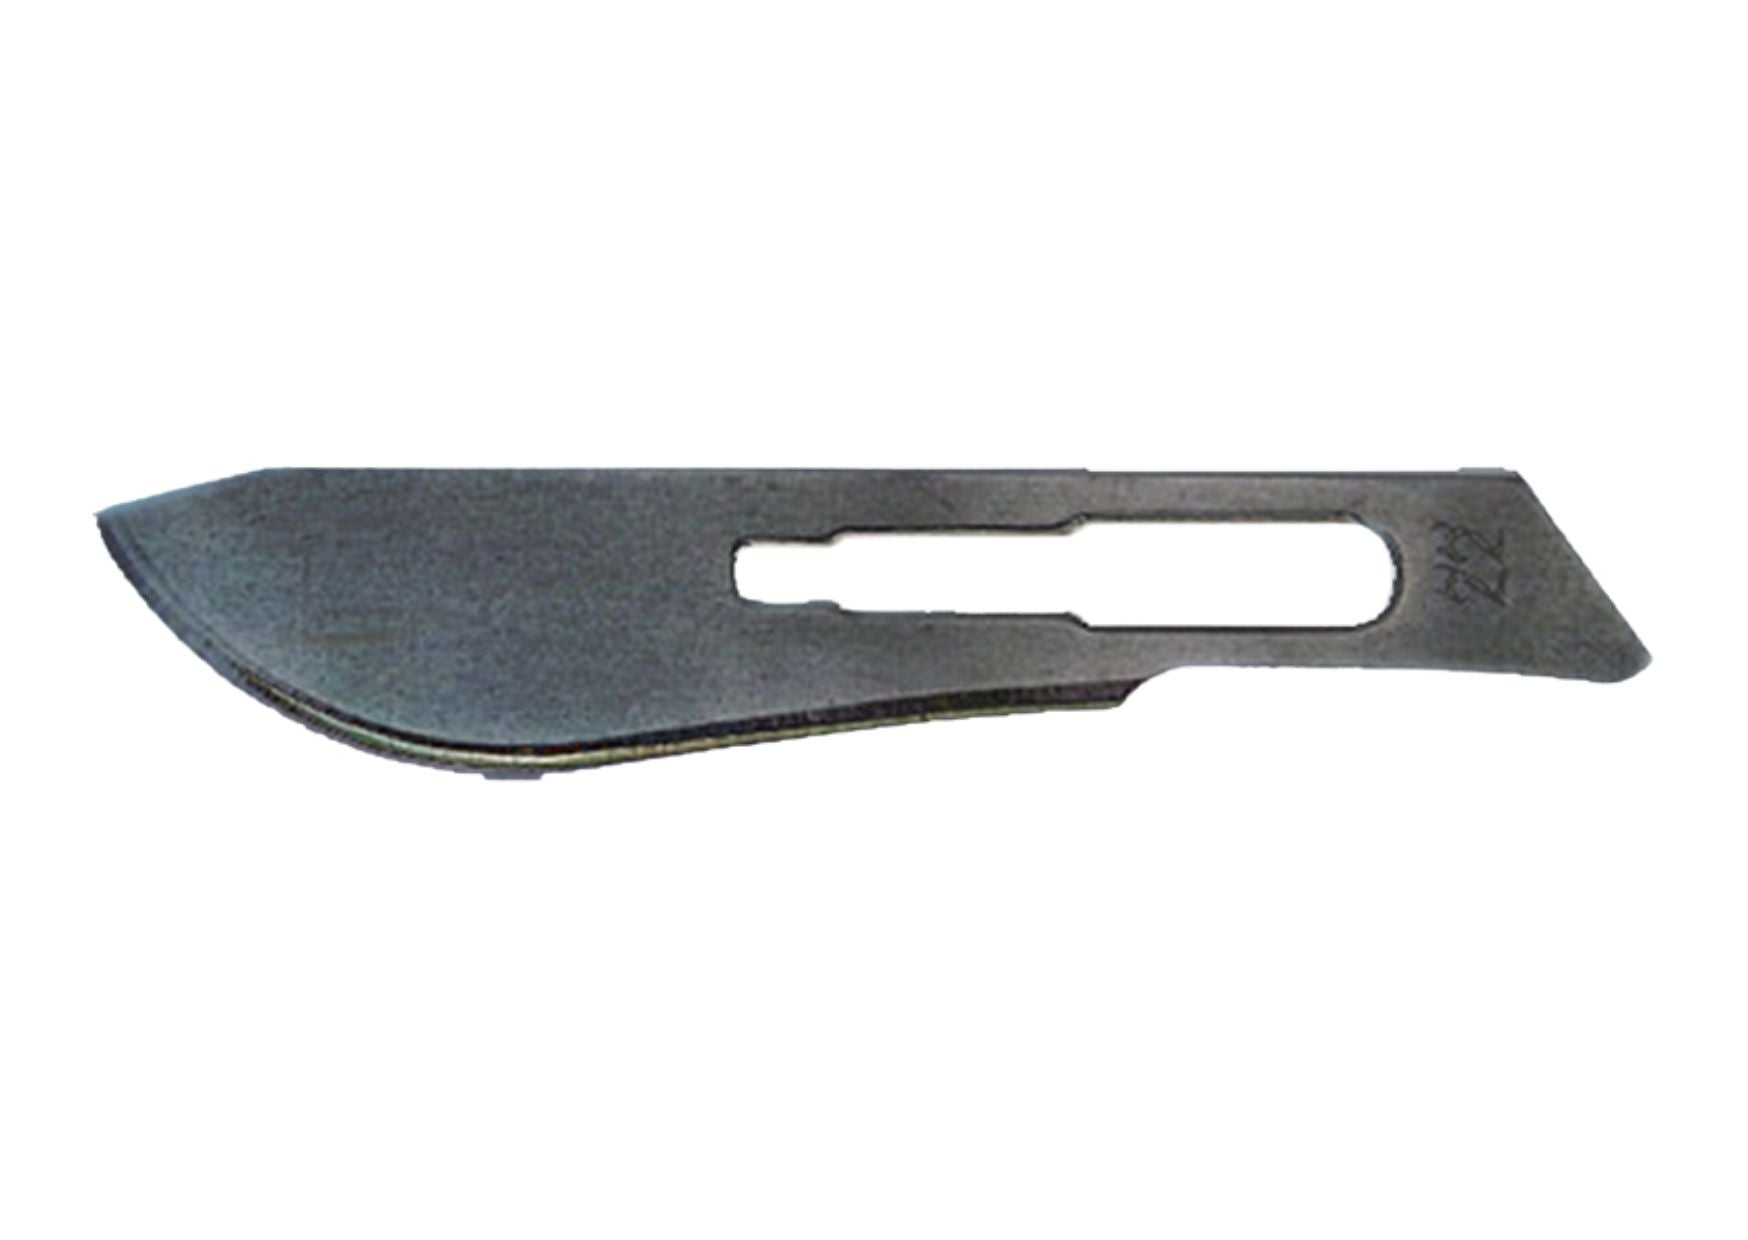 Lavabi's scalpel blades - 0